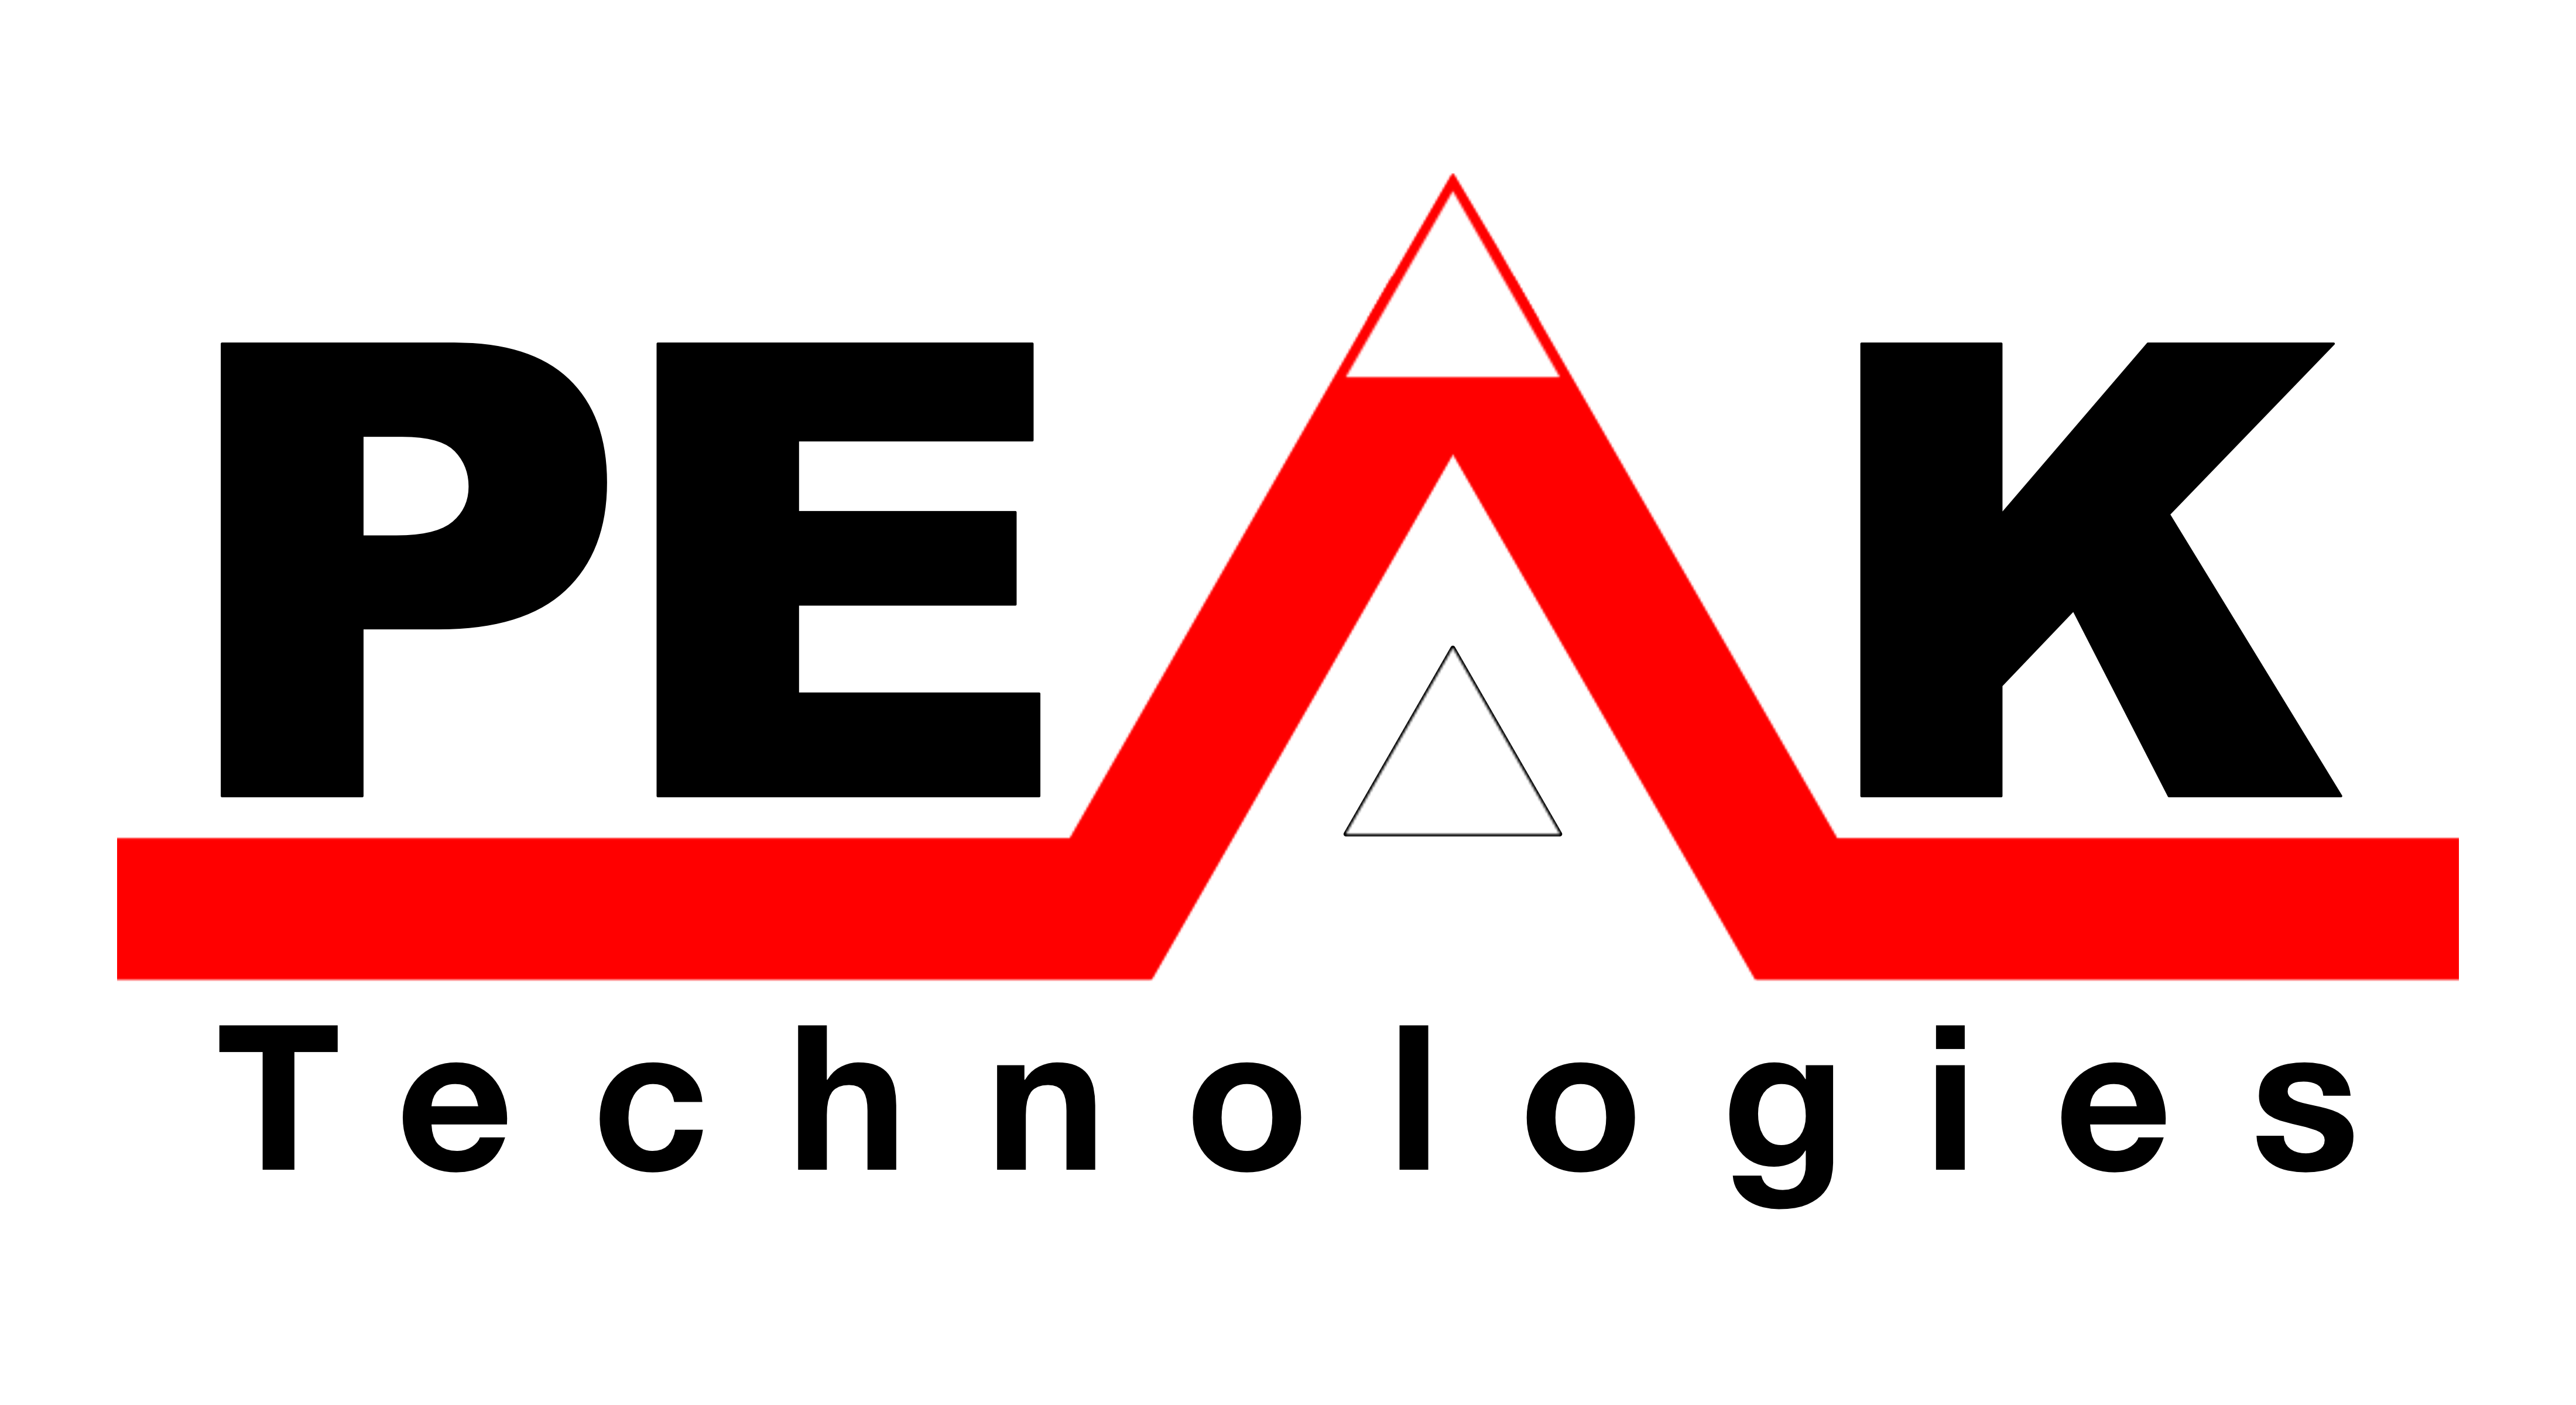 PEAK Technologies